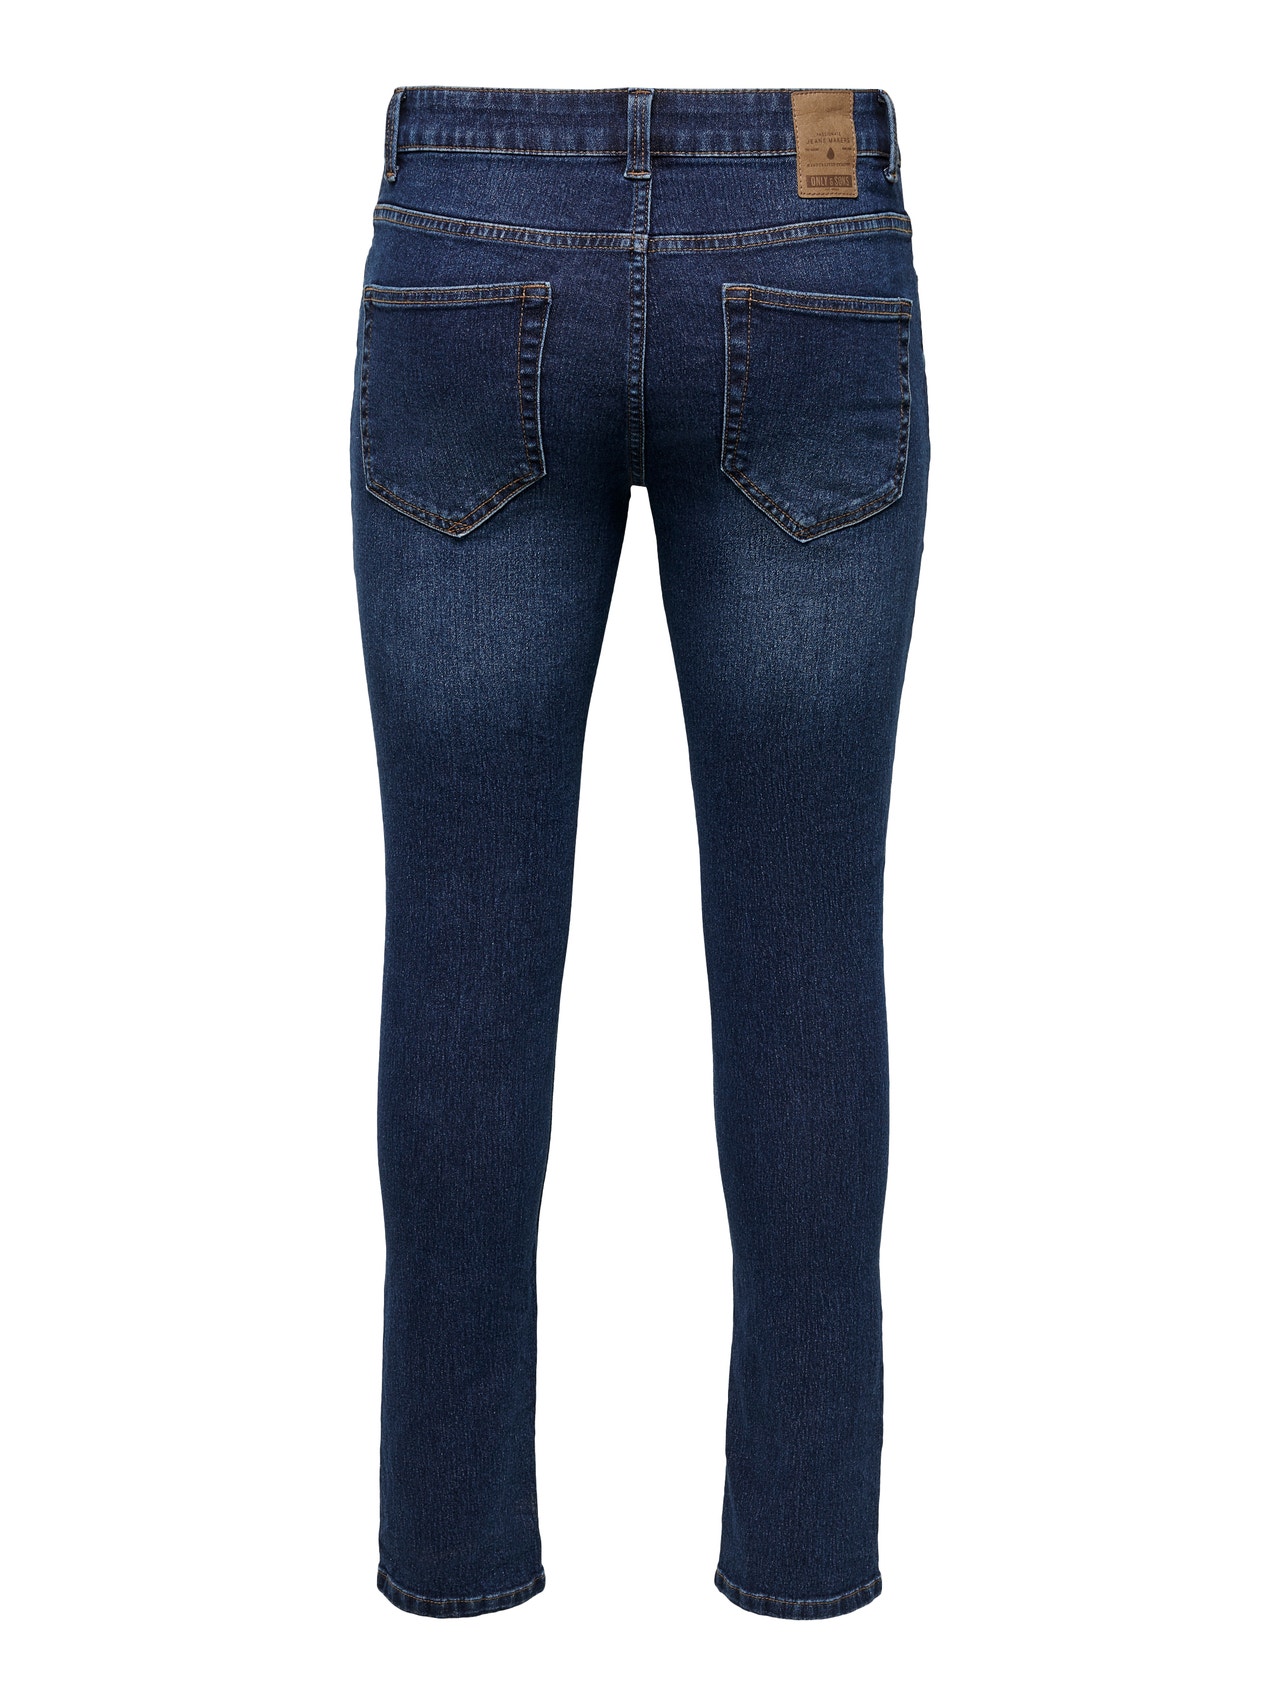 ONLY & SONS Slim Fit Jeans -Blue Denim - 22015144